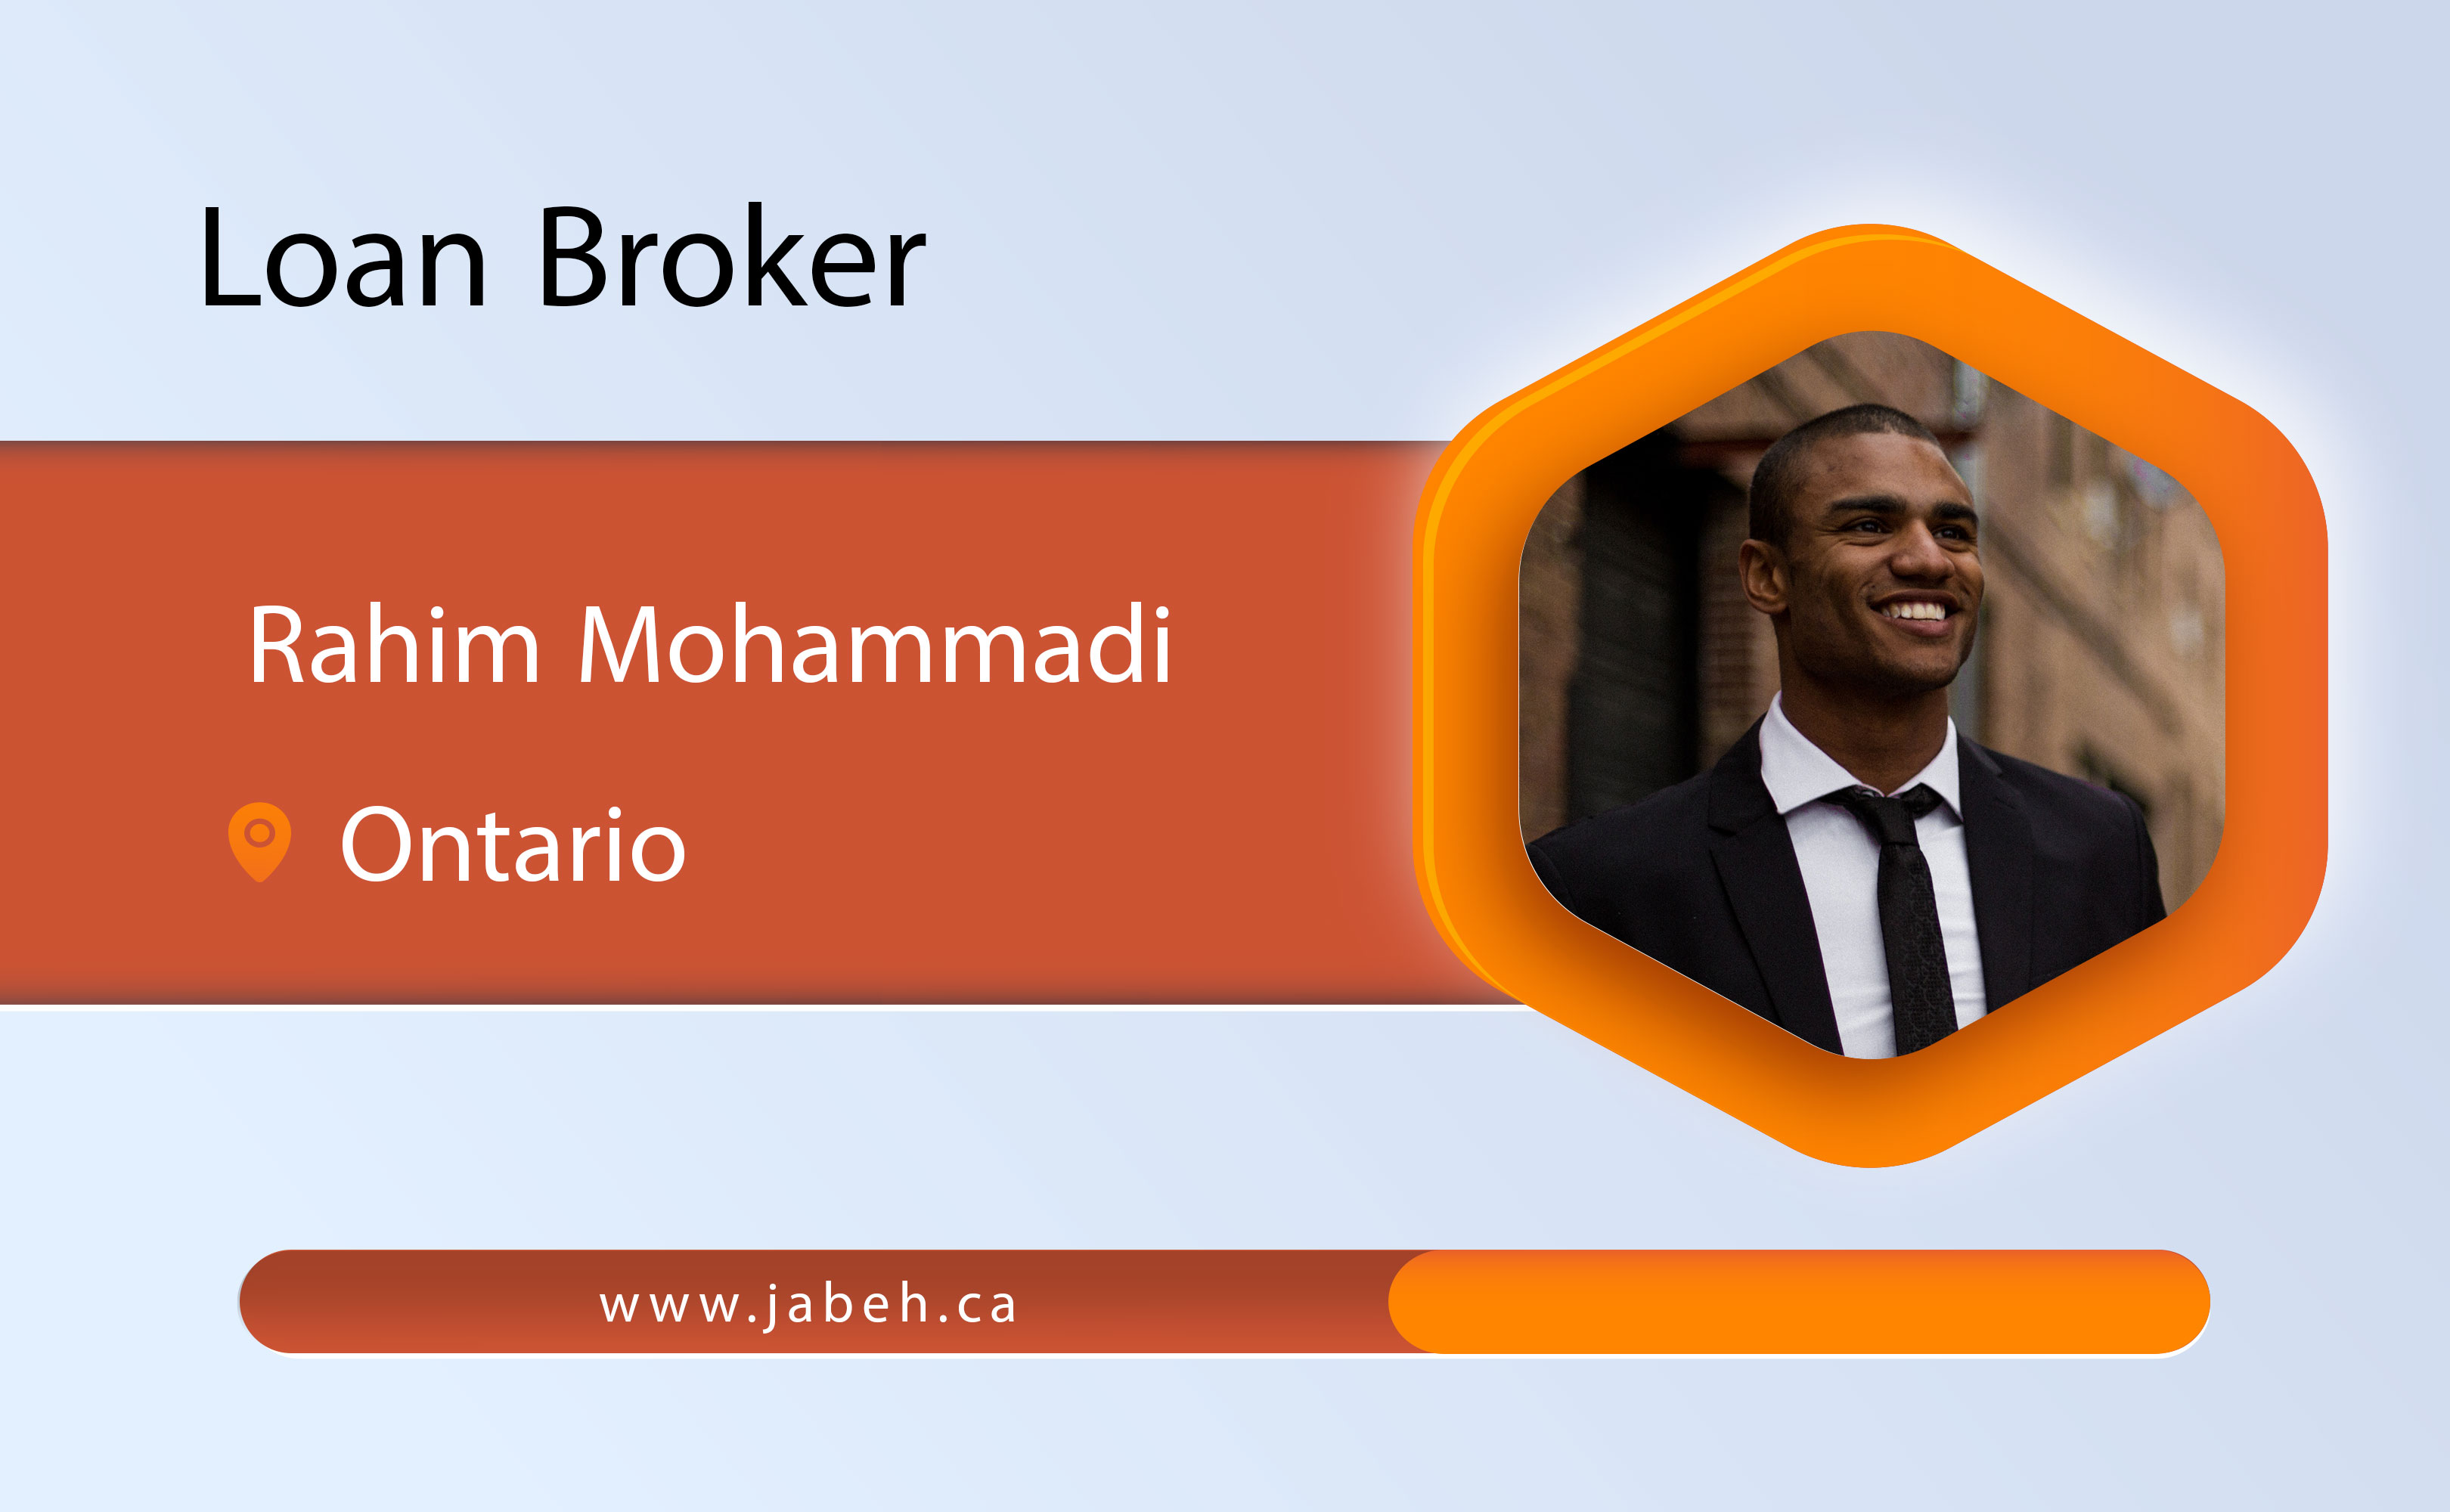 Iranian loan broker Rahim Mohammadi in Ontario